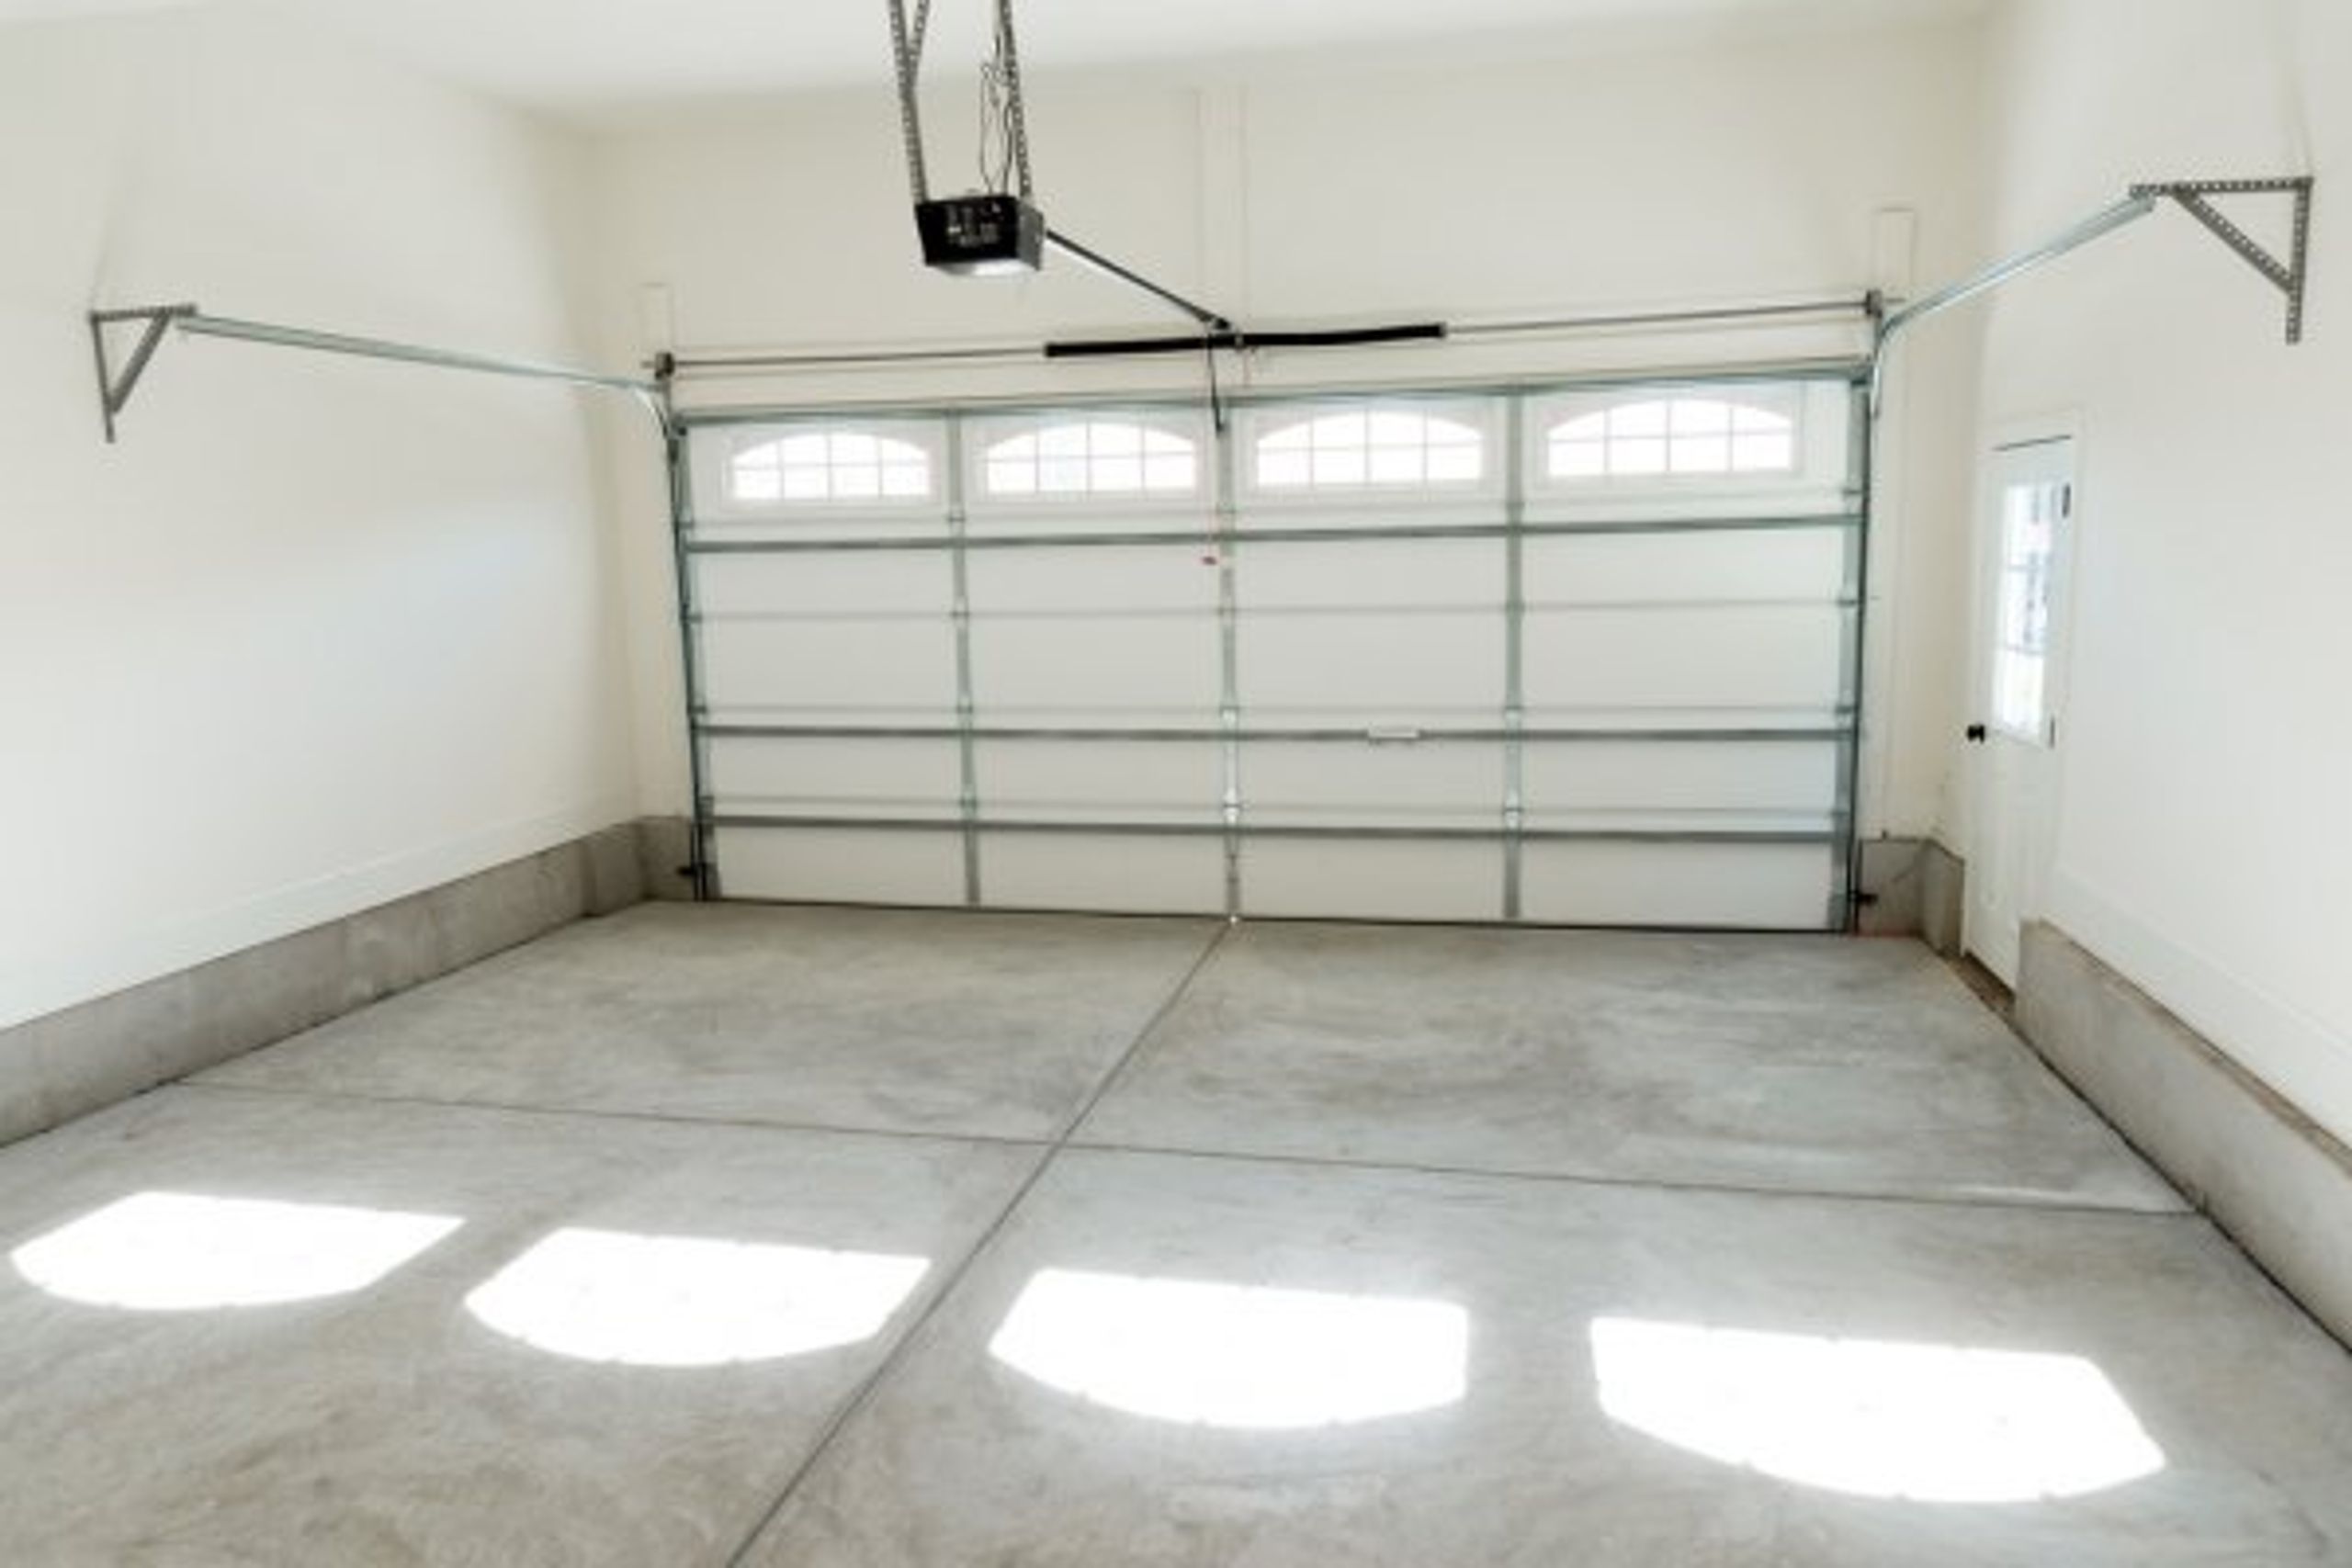 10x20 Garage self storage unit in Pittsburgh, PA